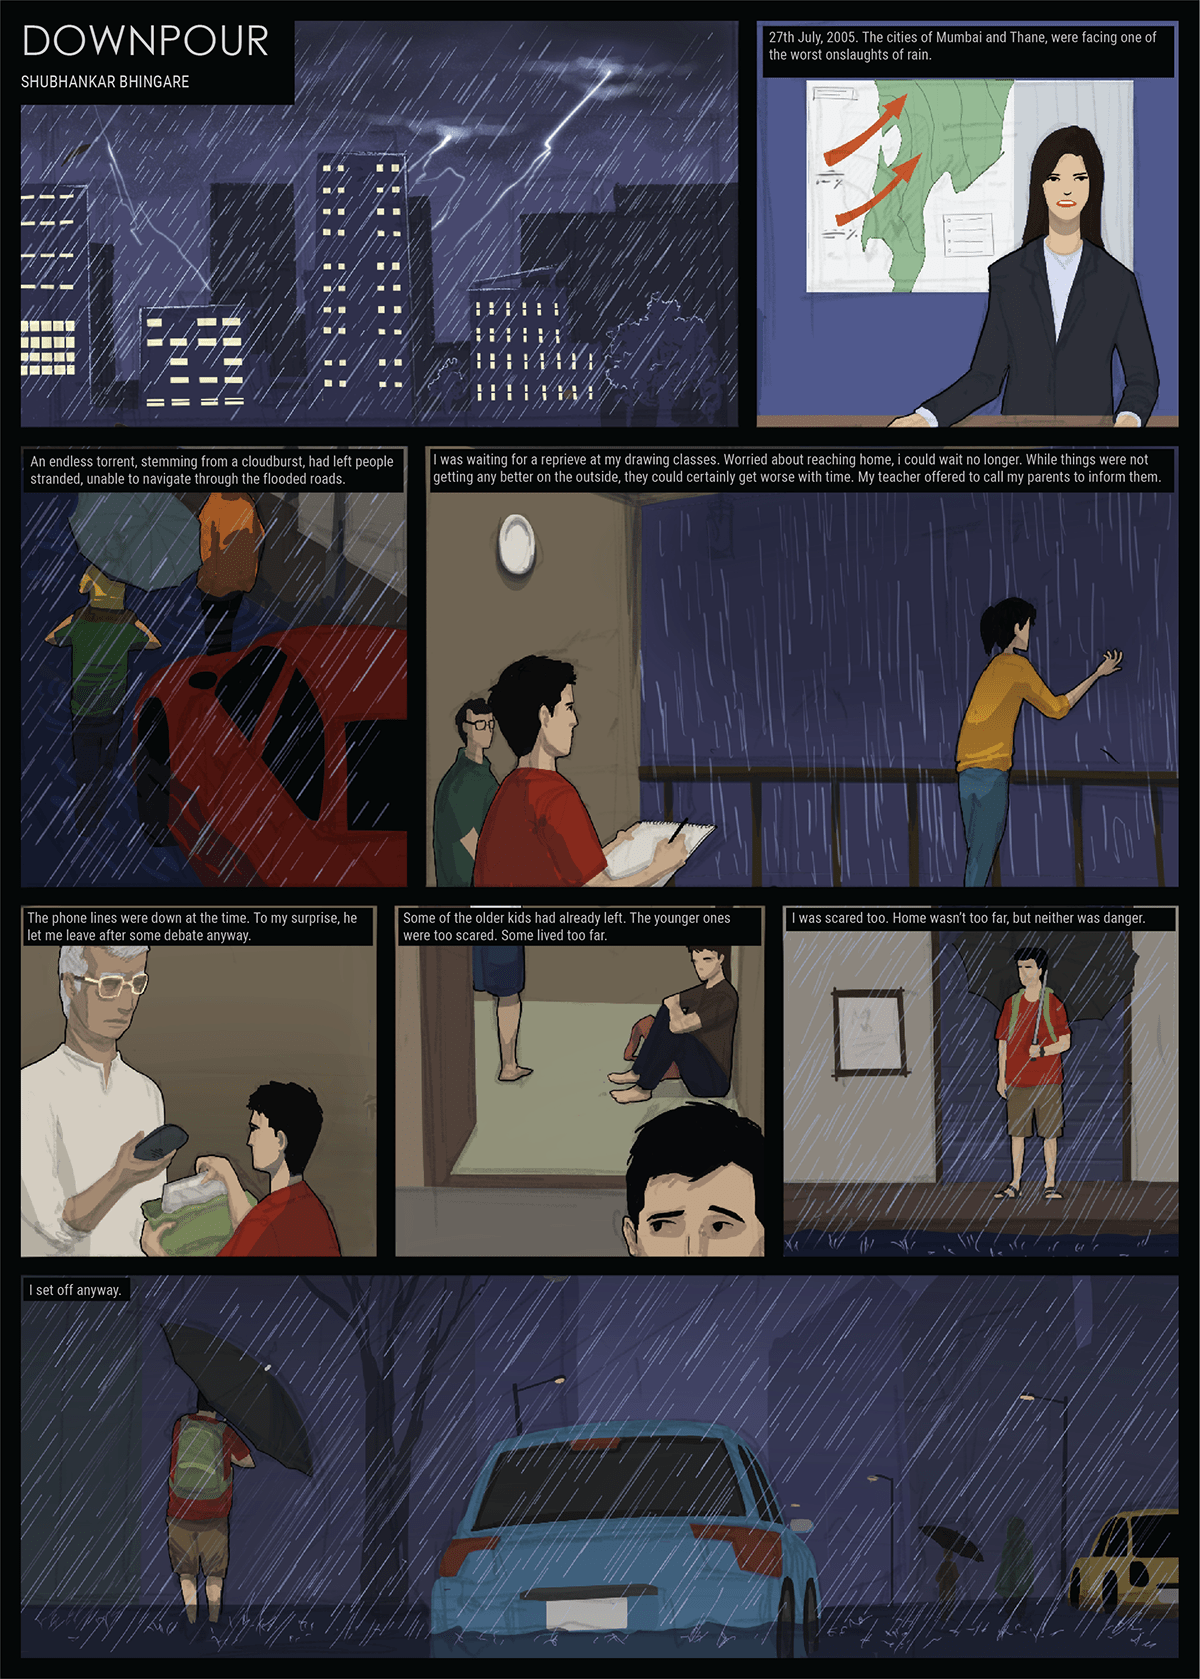 comic Graphic Novel illustrration narration